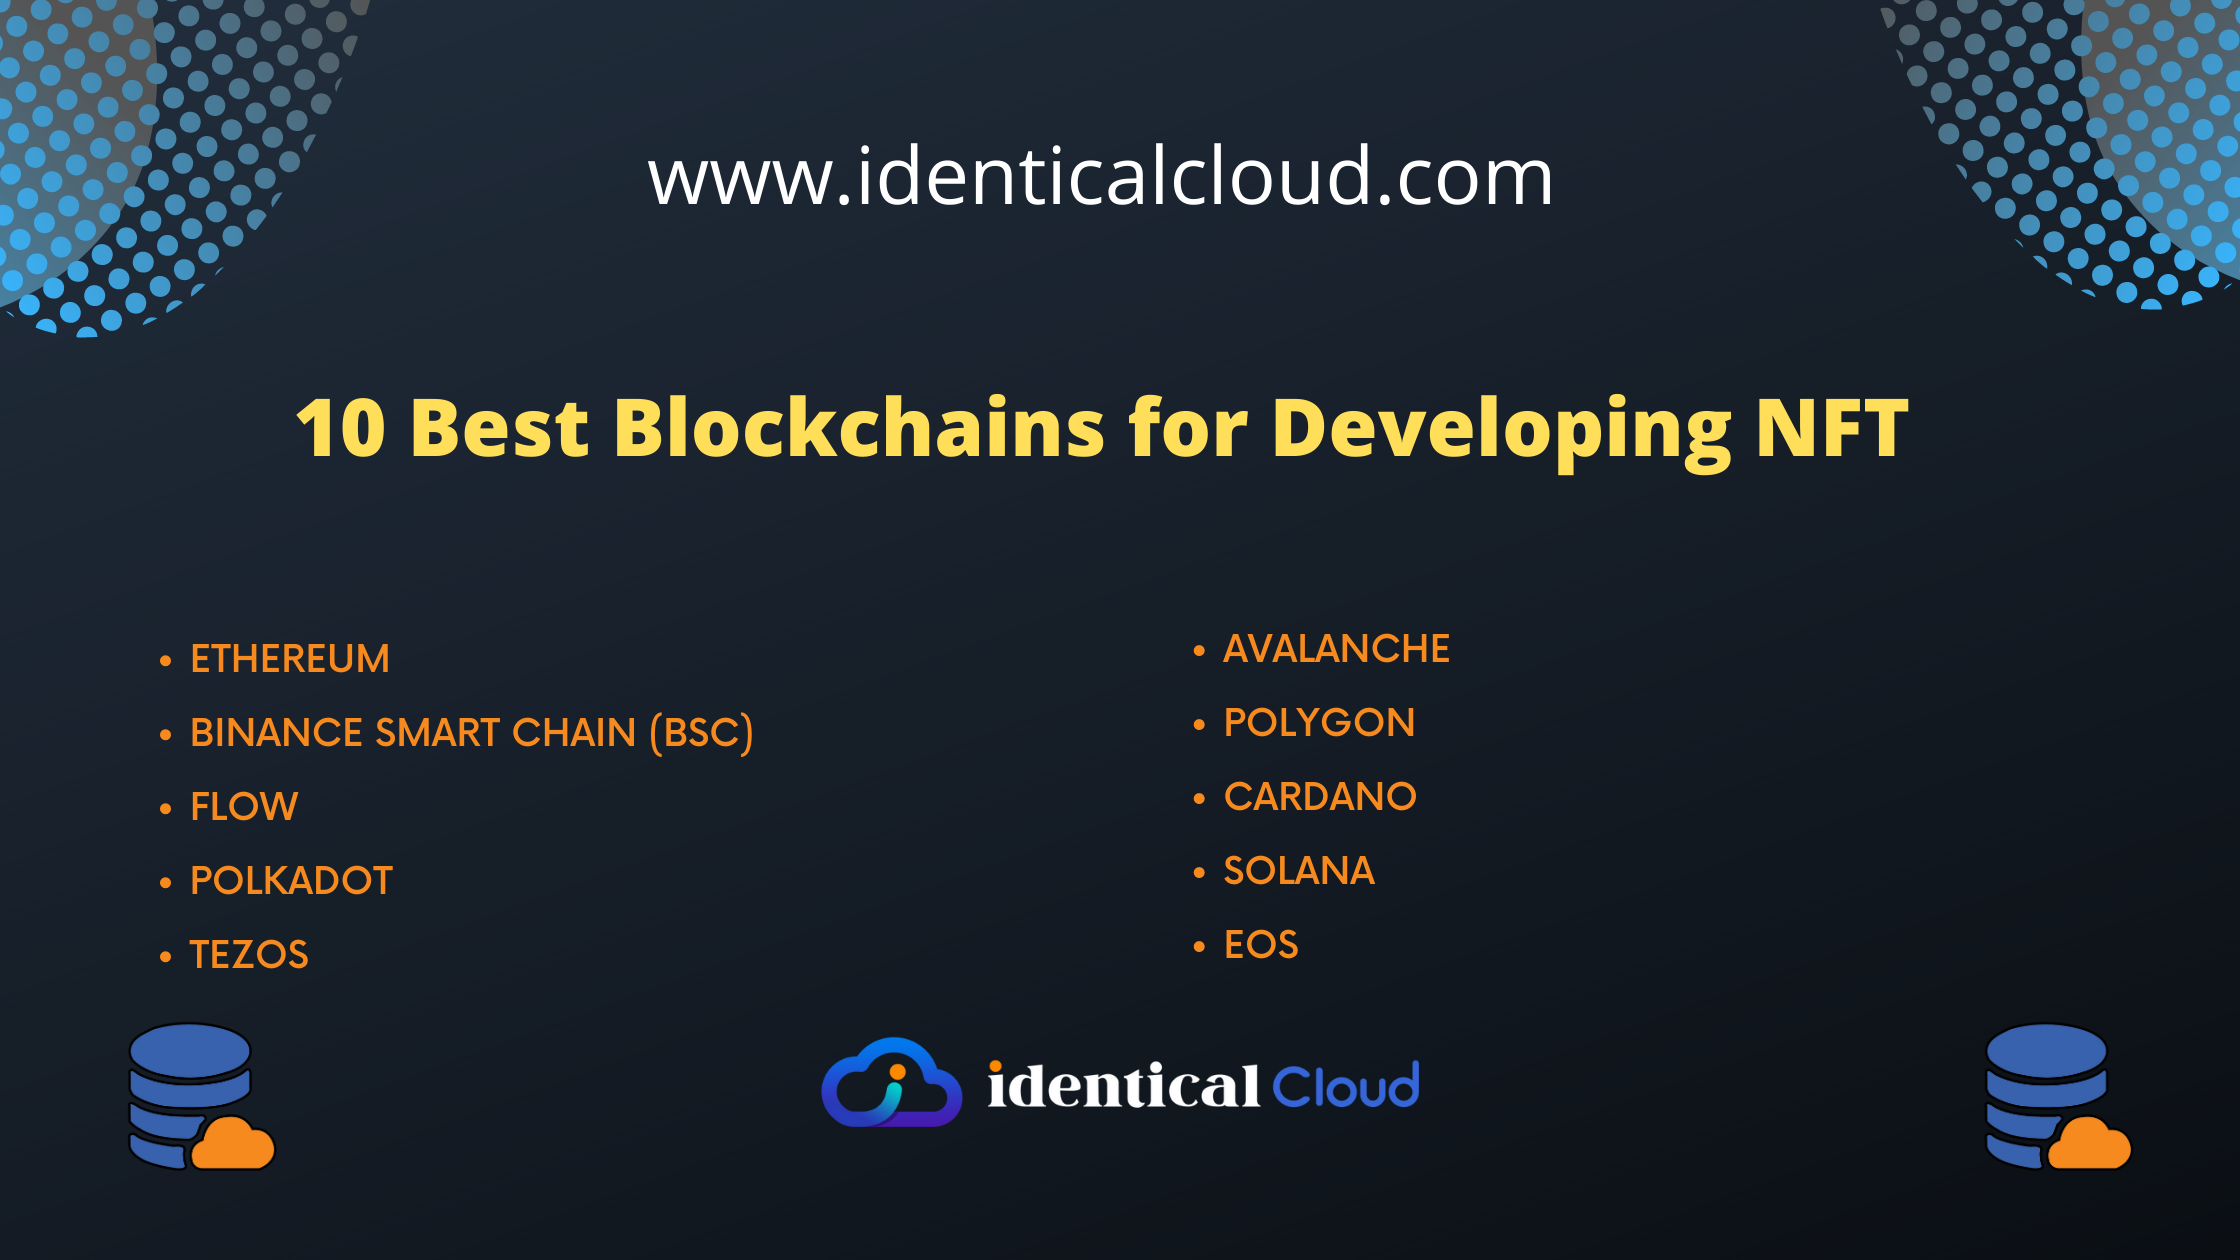 10 Best Blockchains for Developing NFT - identicalcloud.com